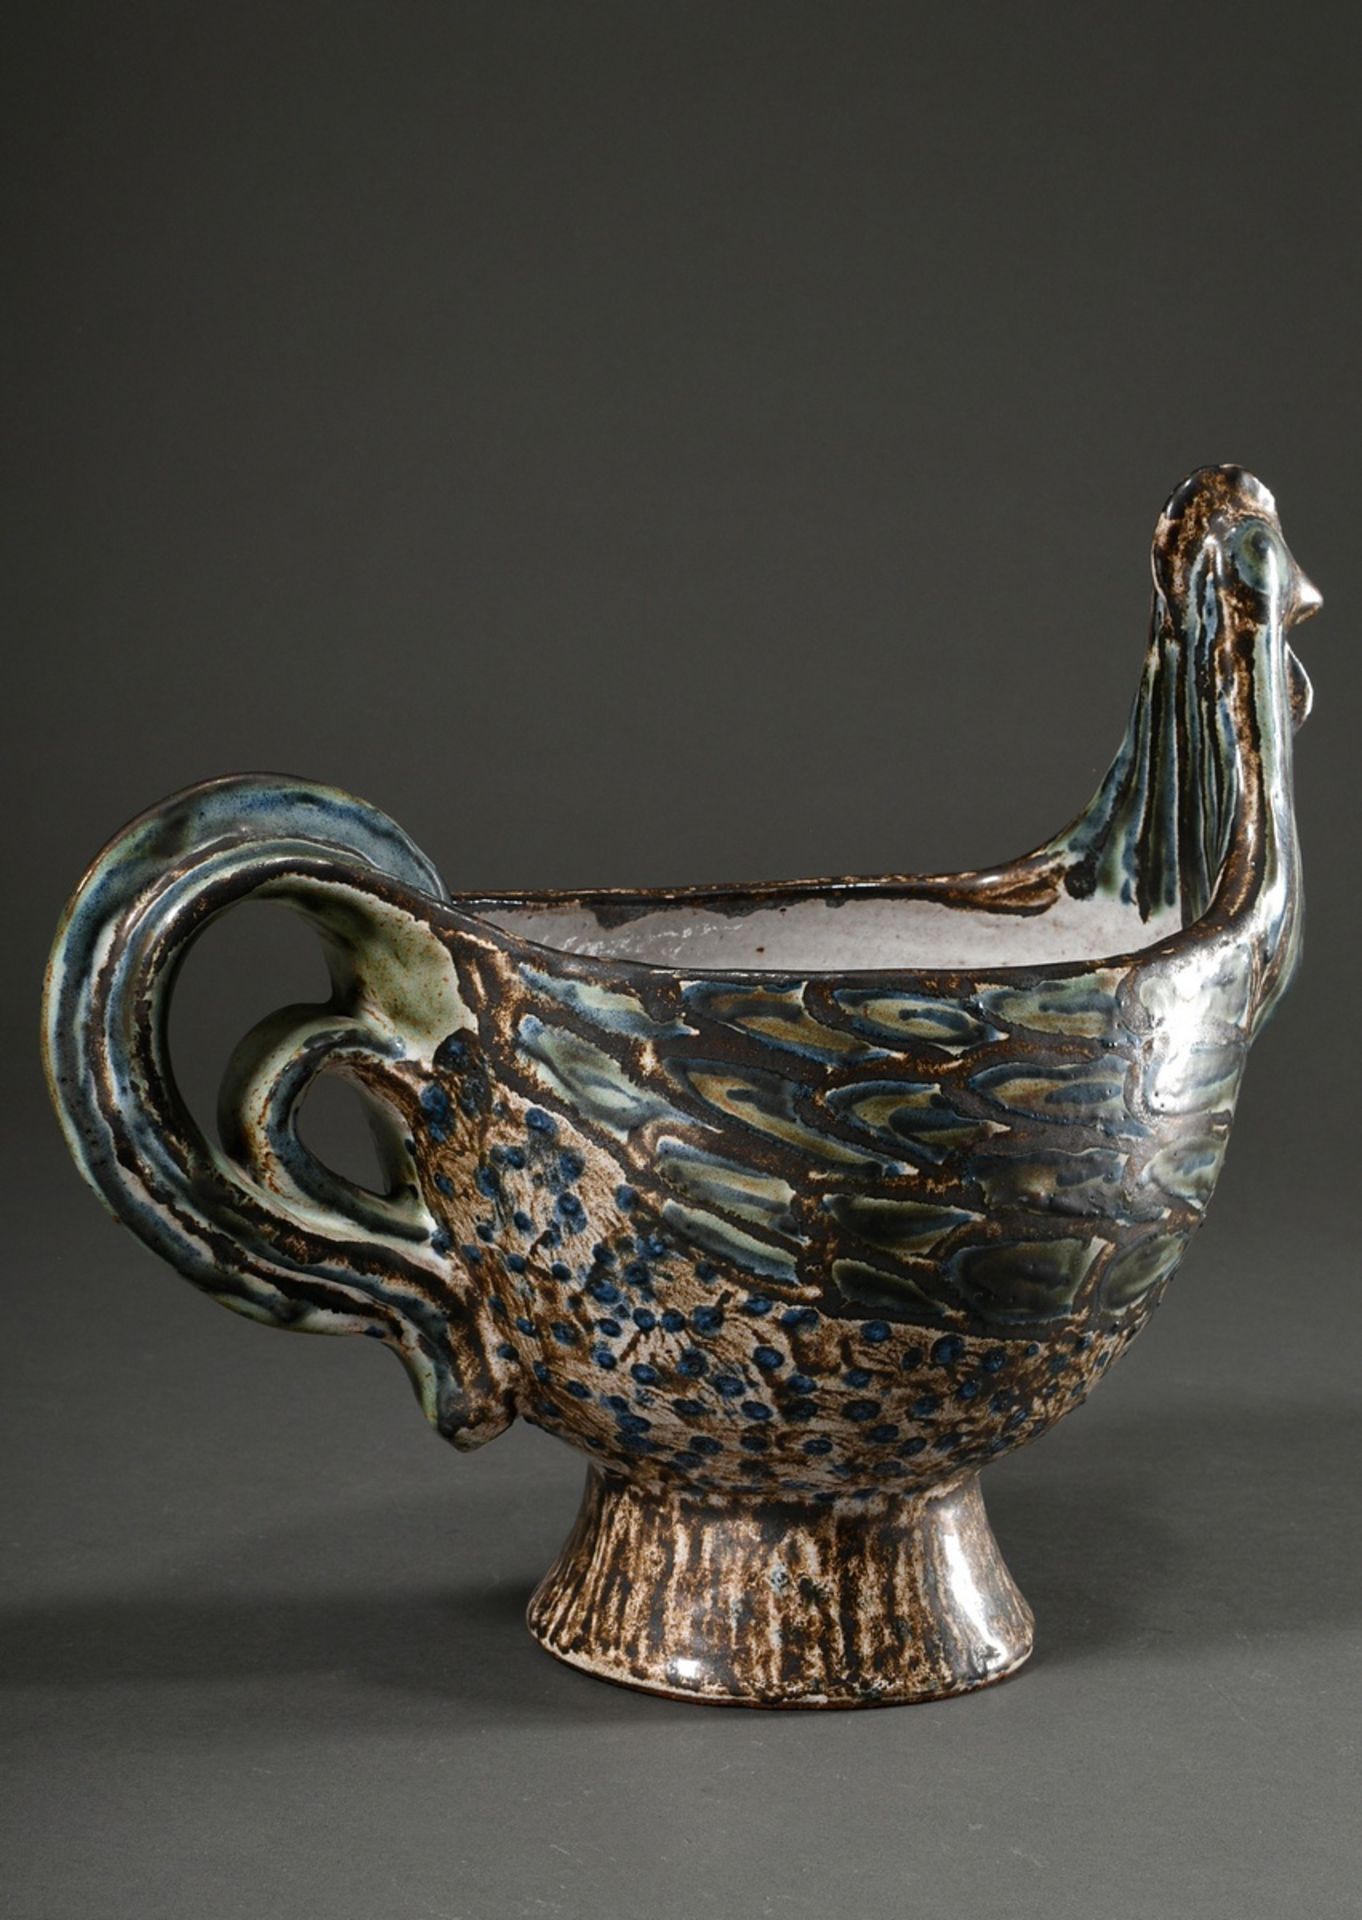 Maetzel, Monika (1917-2010) studio ceramic vessel in animal form "Chicken", ceramic white/green/blu - Image 3 of 6